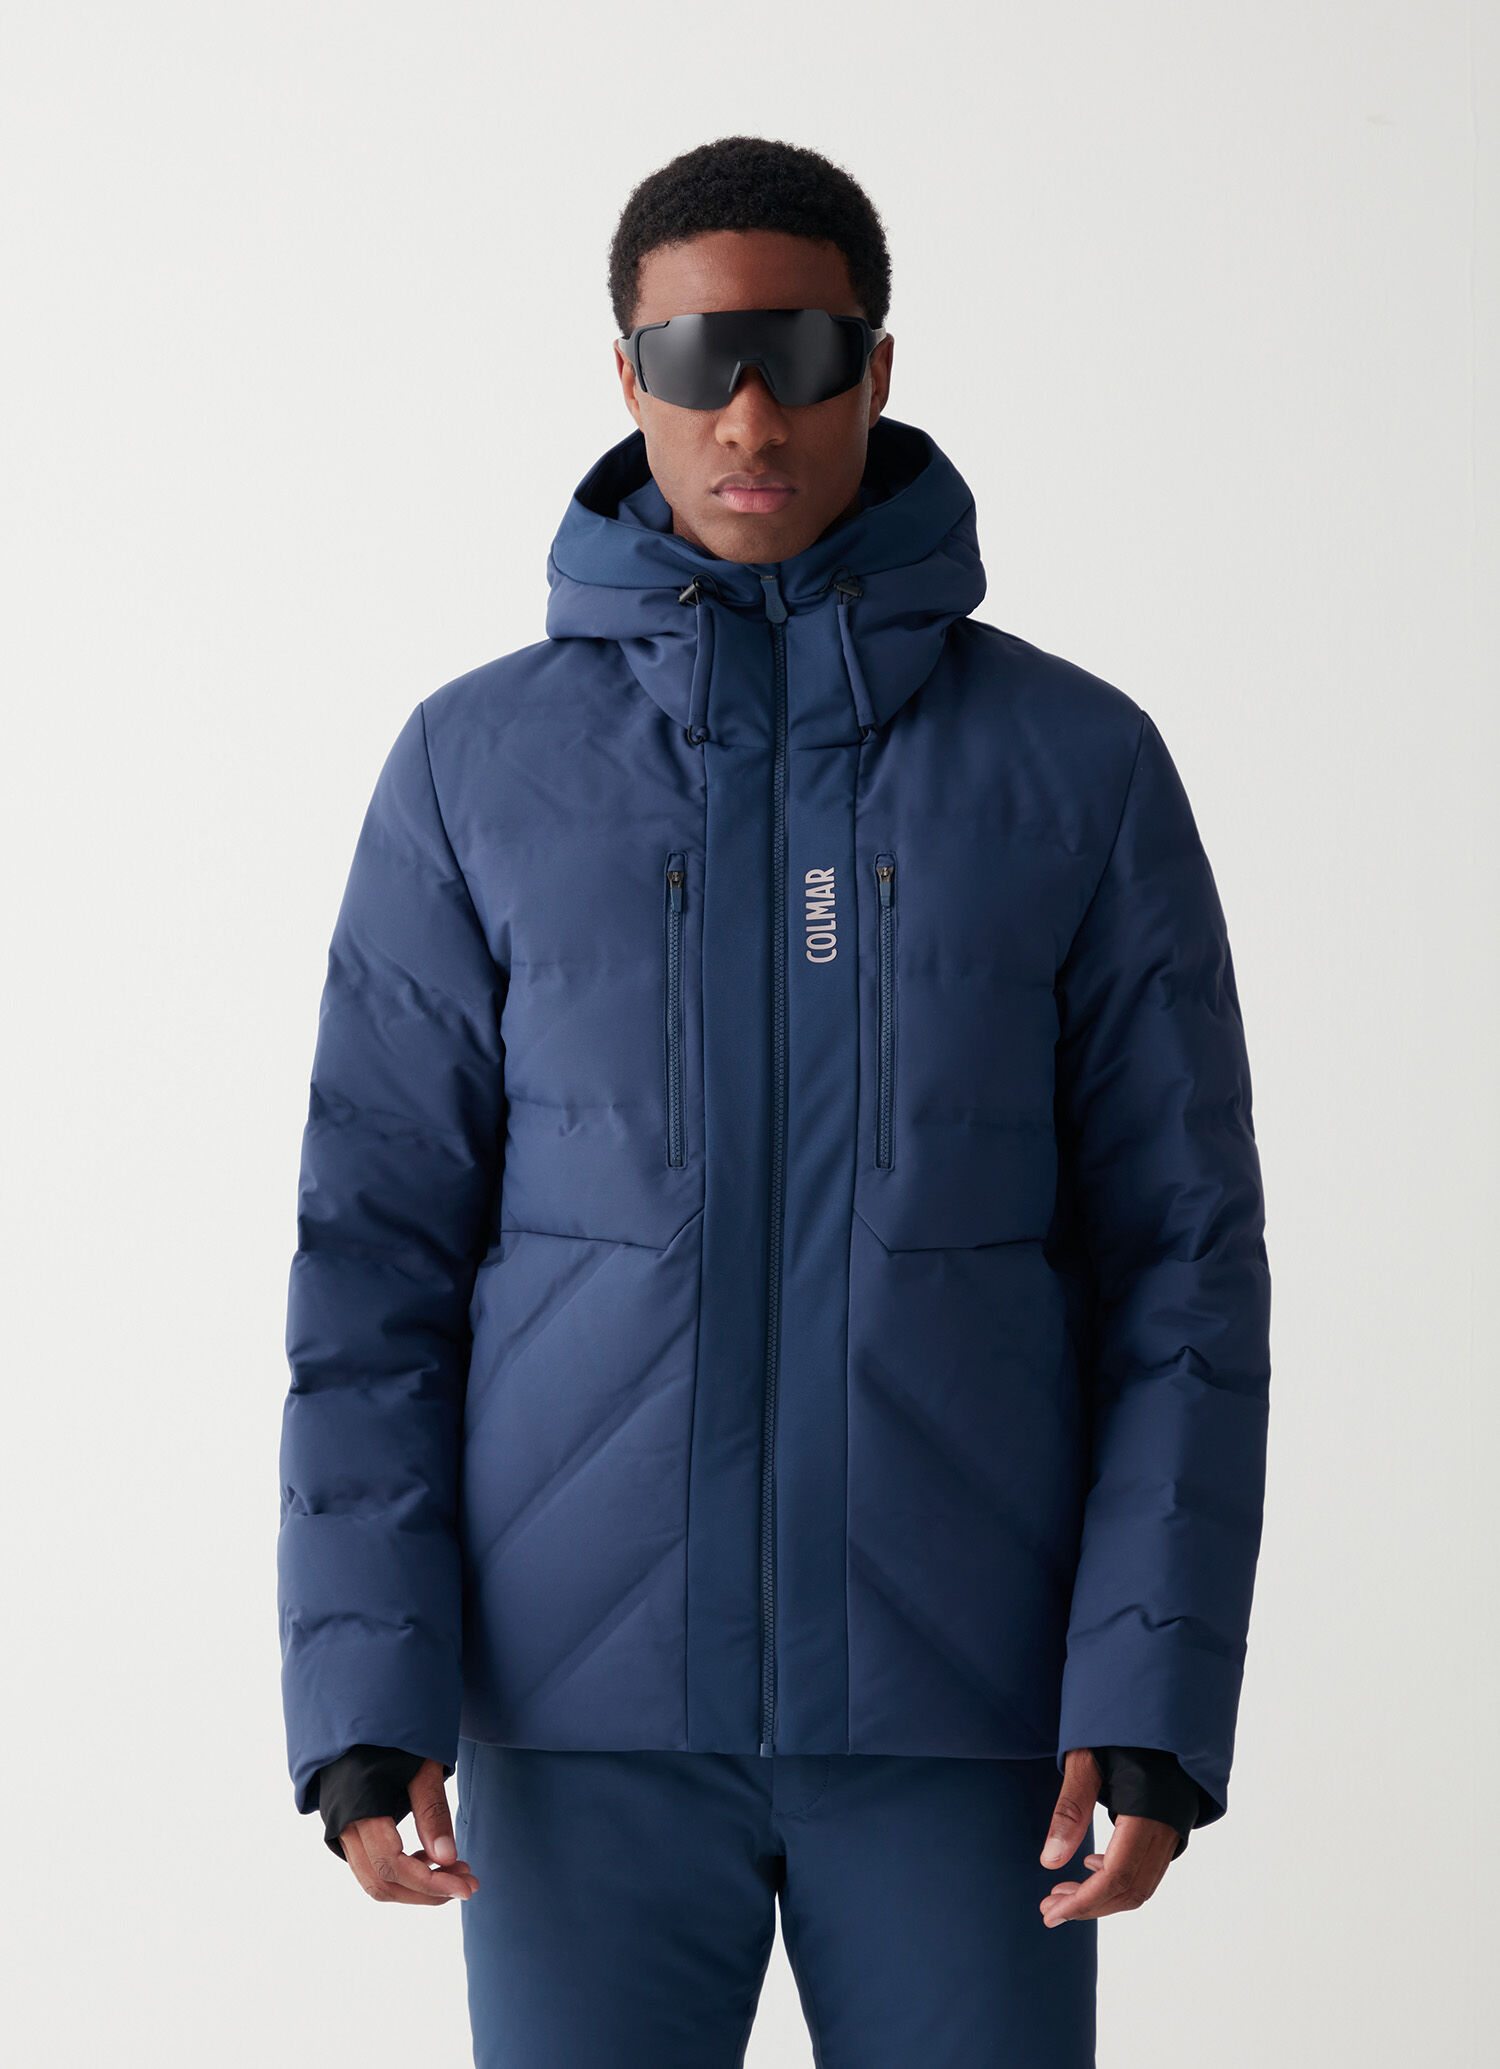 Colmar men's ski jackets - Colmar